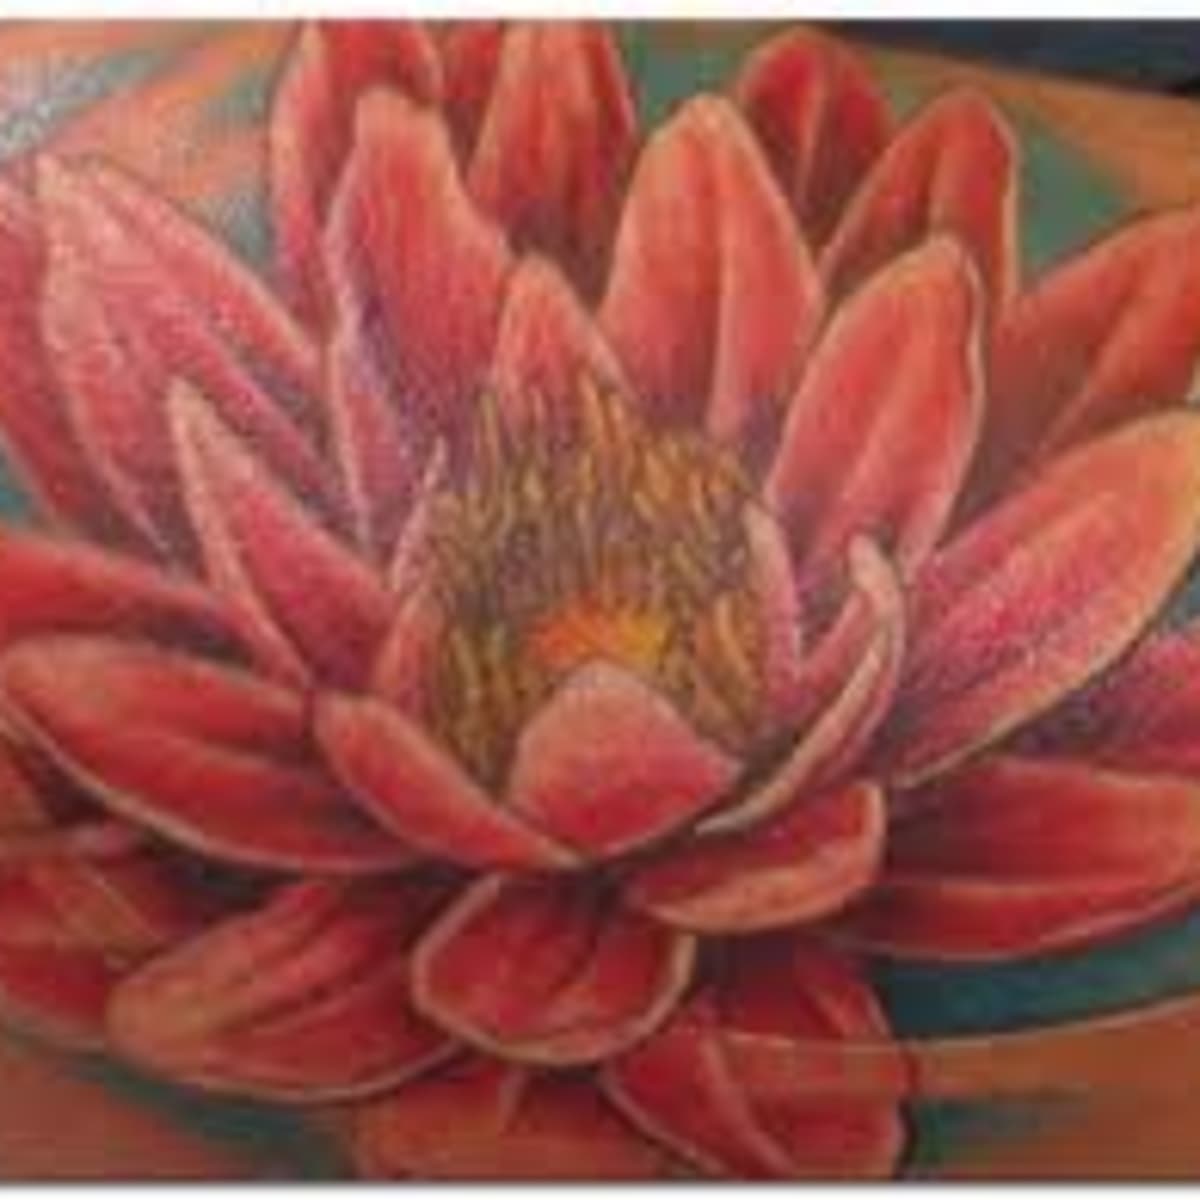 lotus flower tattoos for men